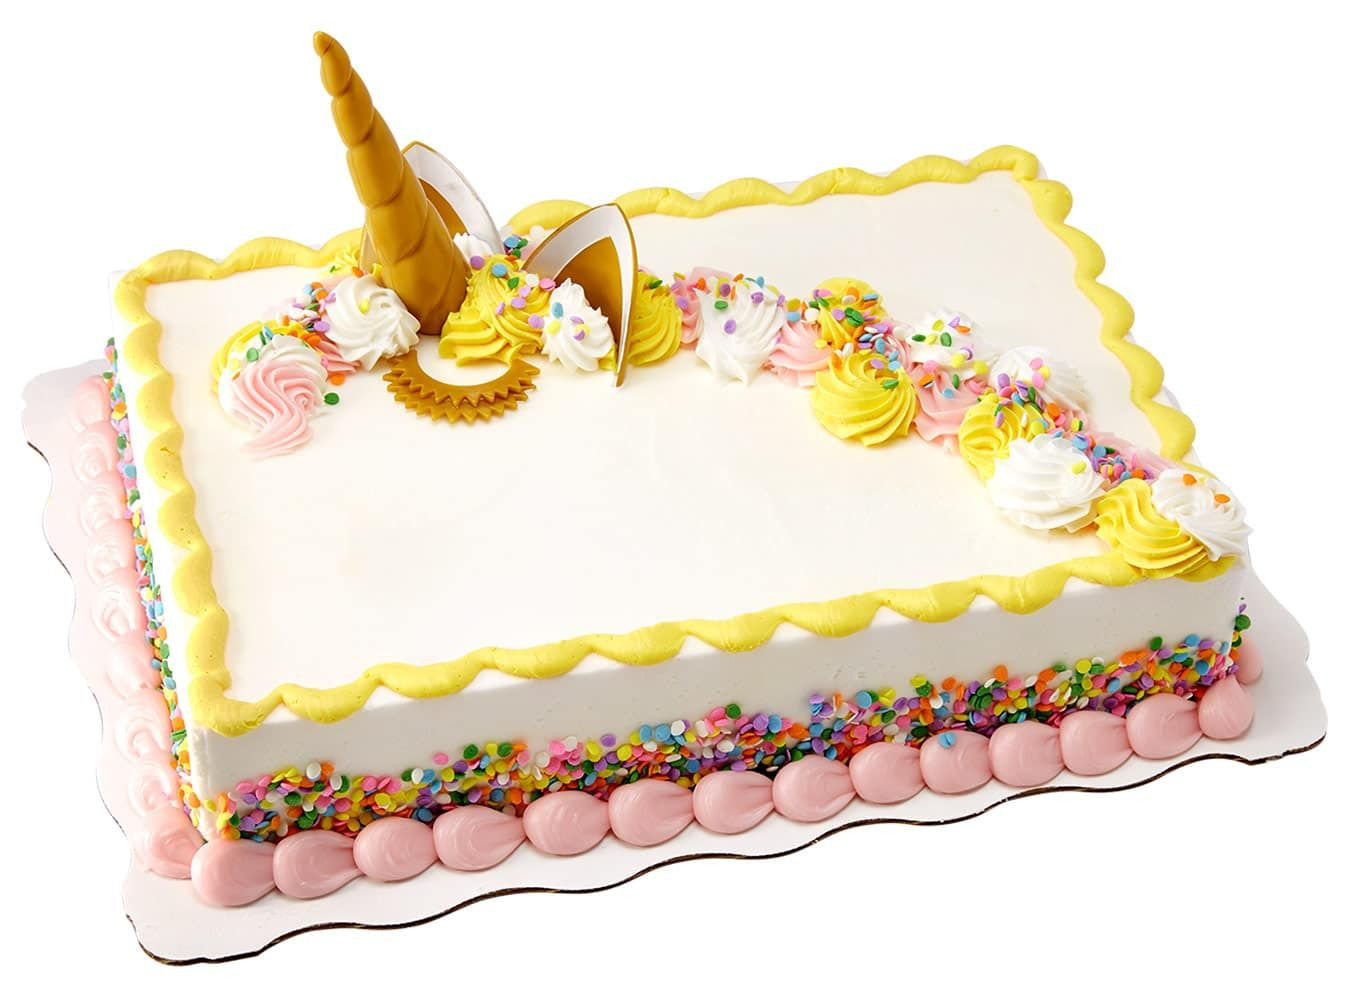 Walmart Custom Birthday Cakes
 Walmart custom cakes in 2020